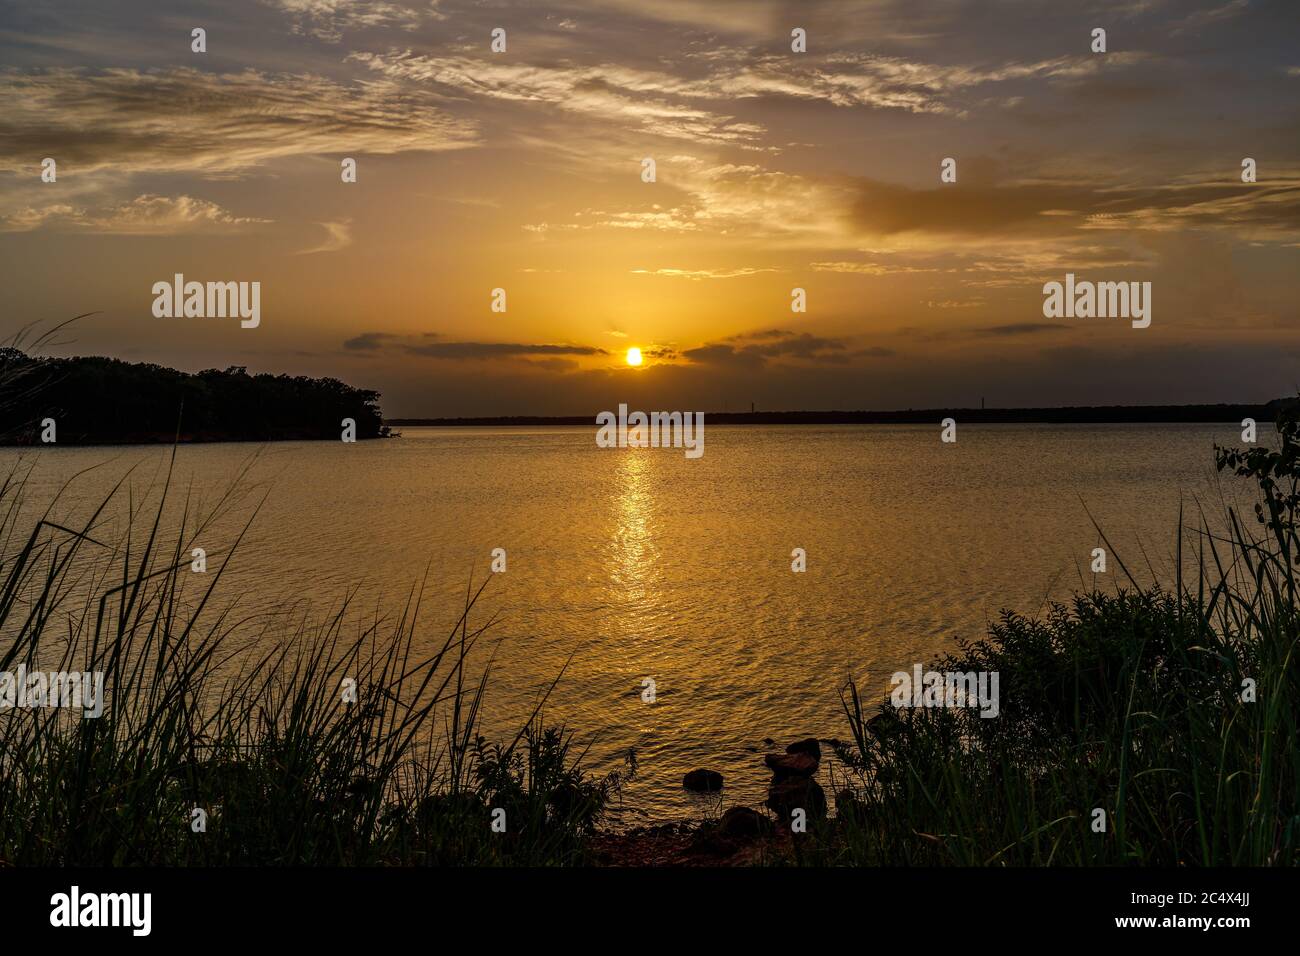 Beautifull sunset over a lake in Oklahoma. Stock Photo